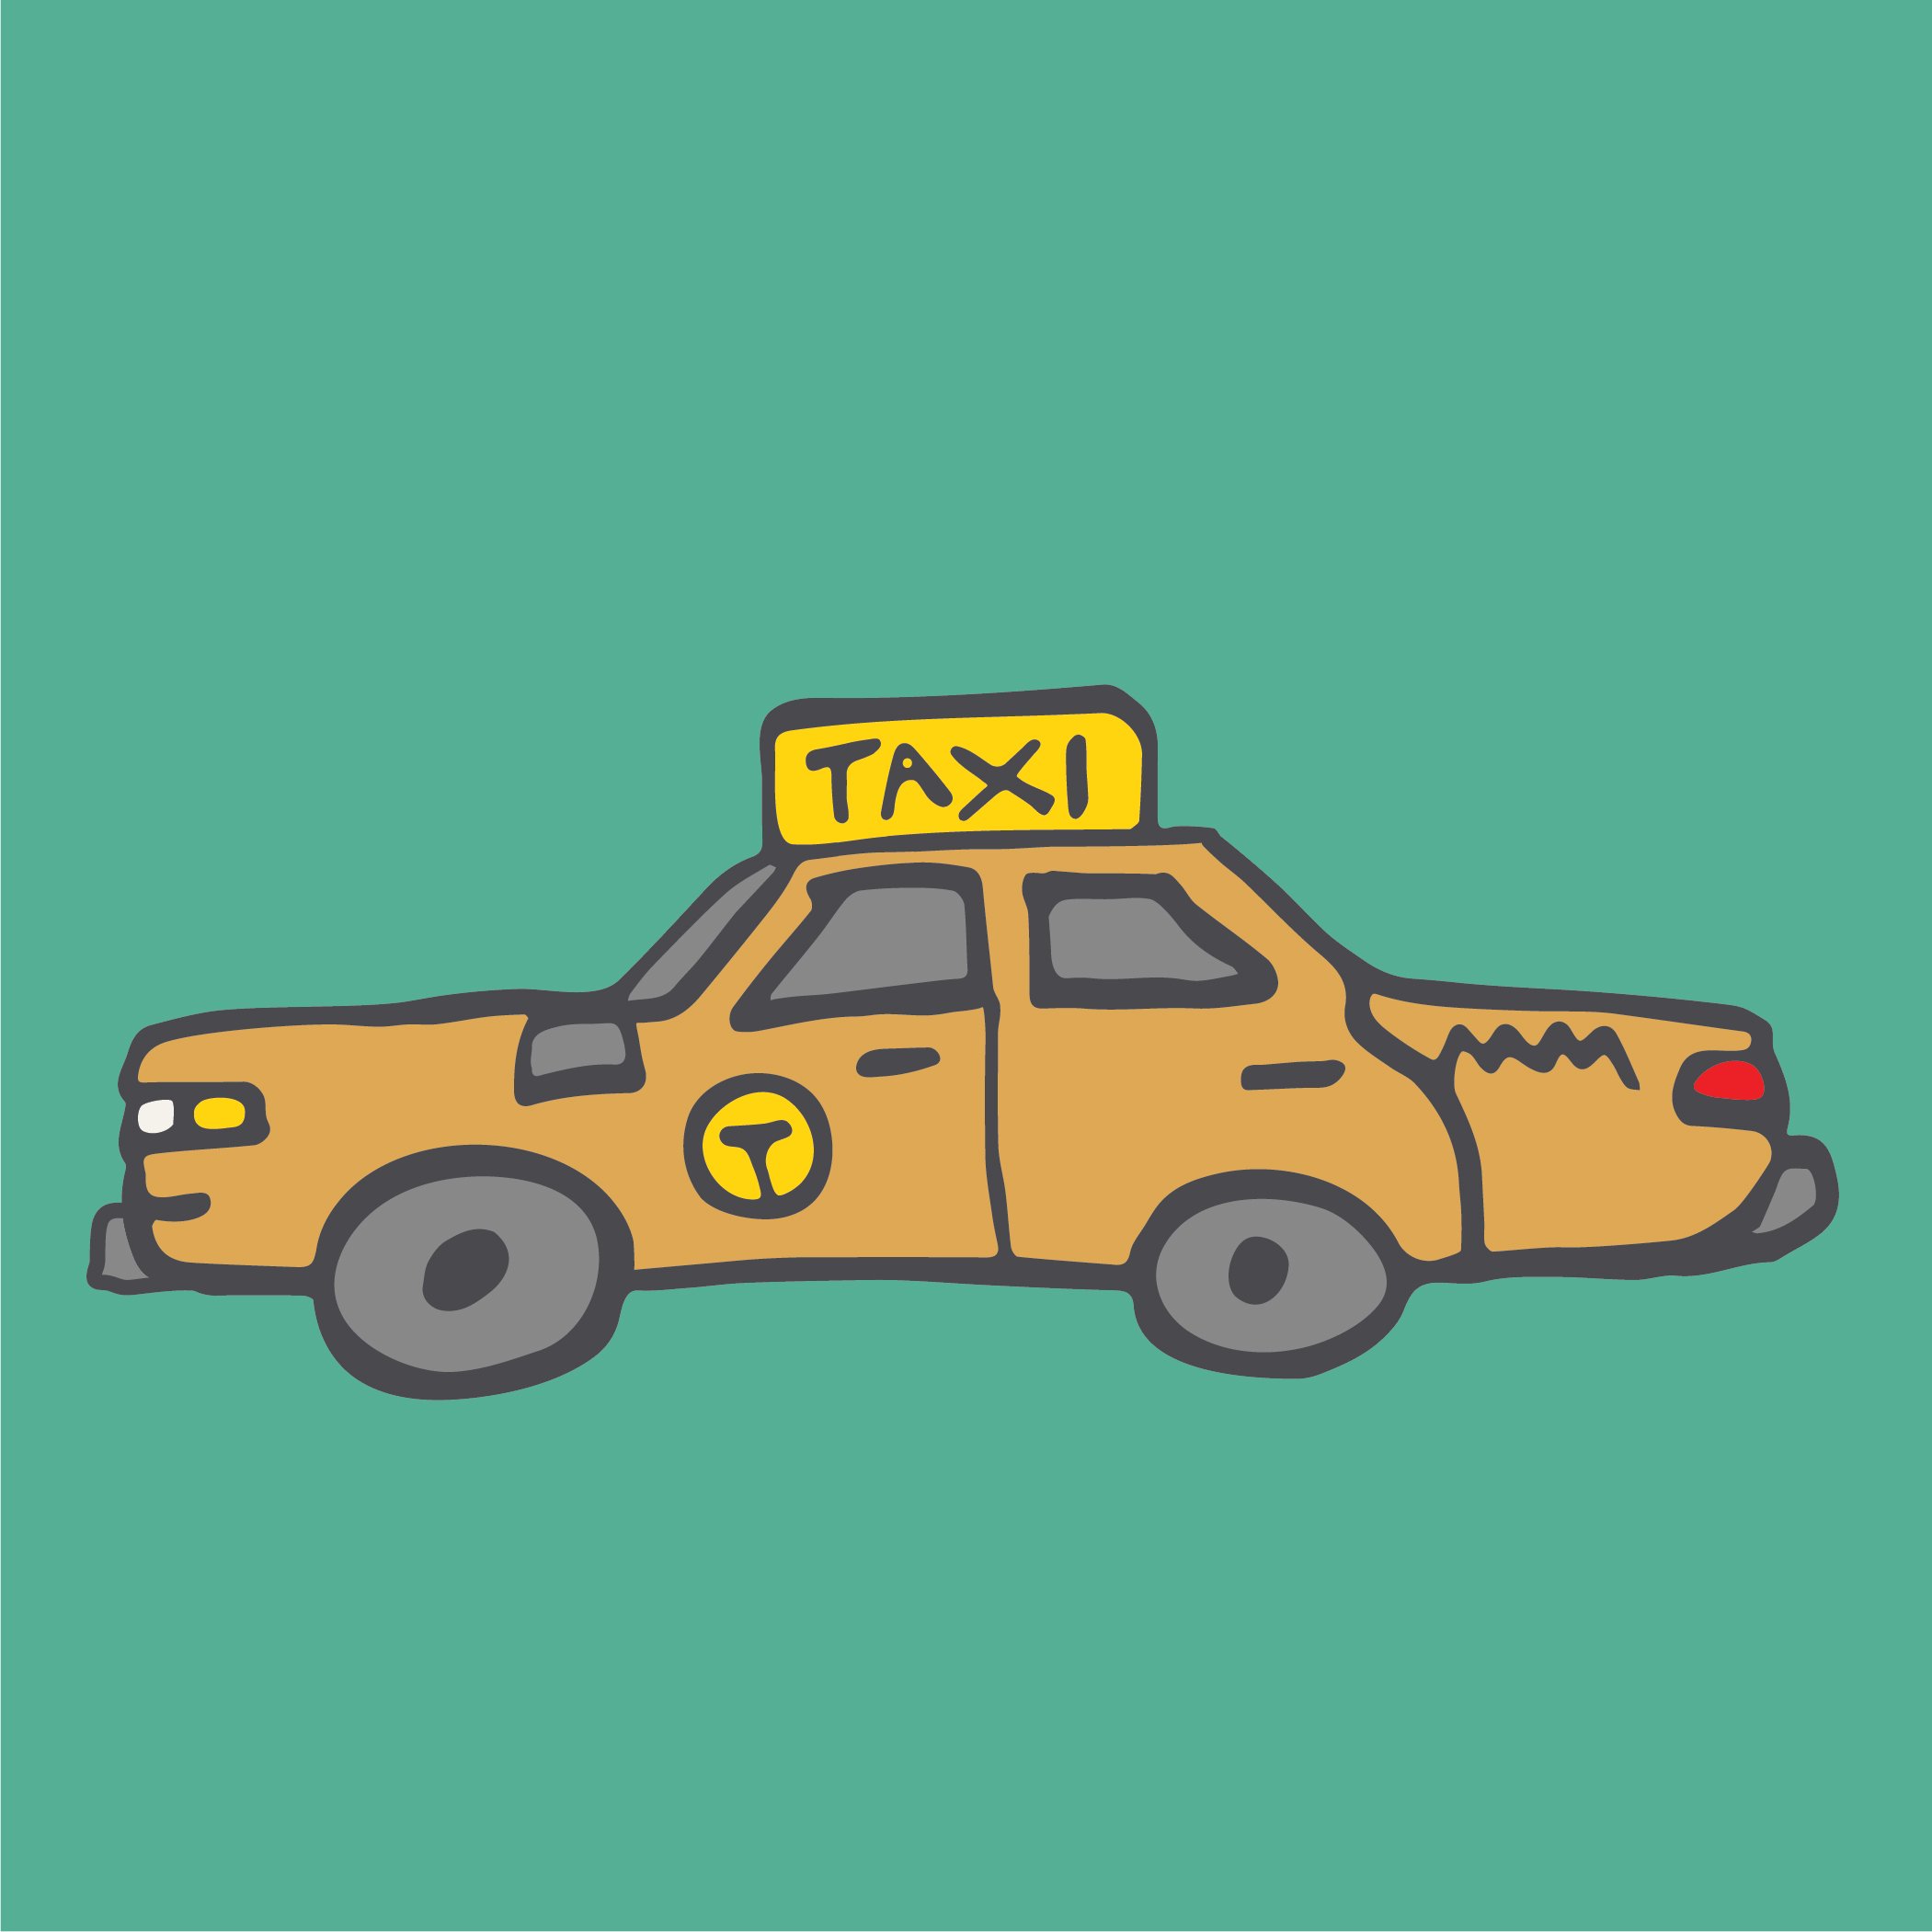 New York Drawings_7- Taxi_7- Taxi.jpg